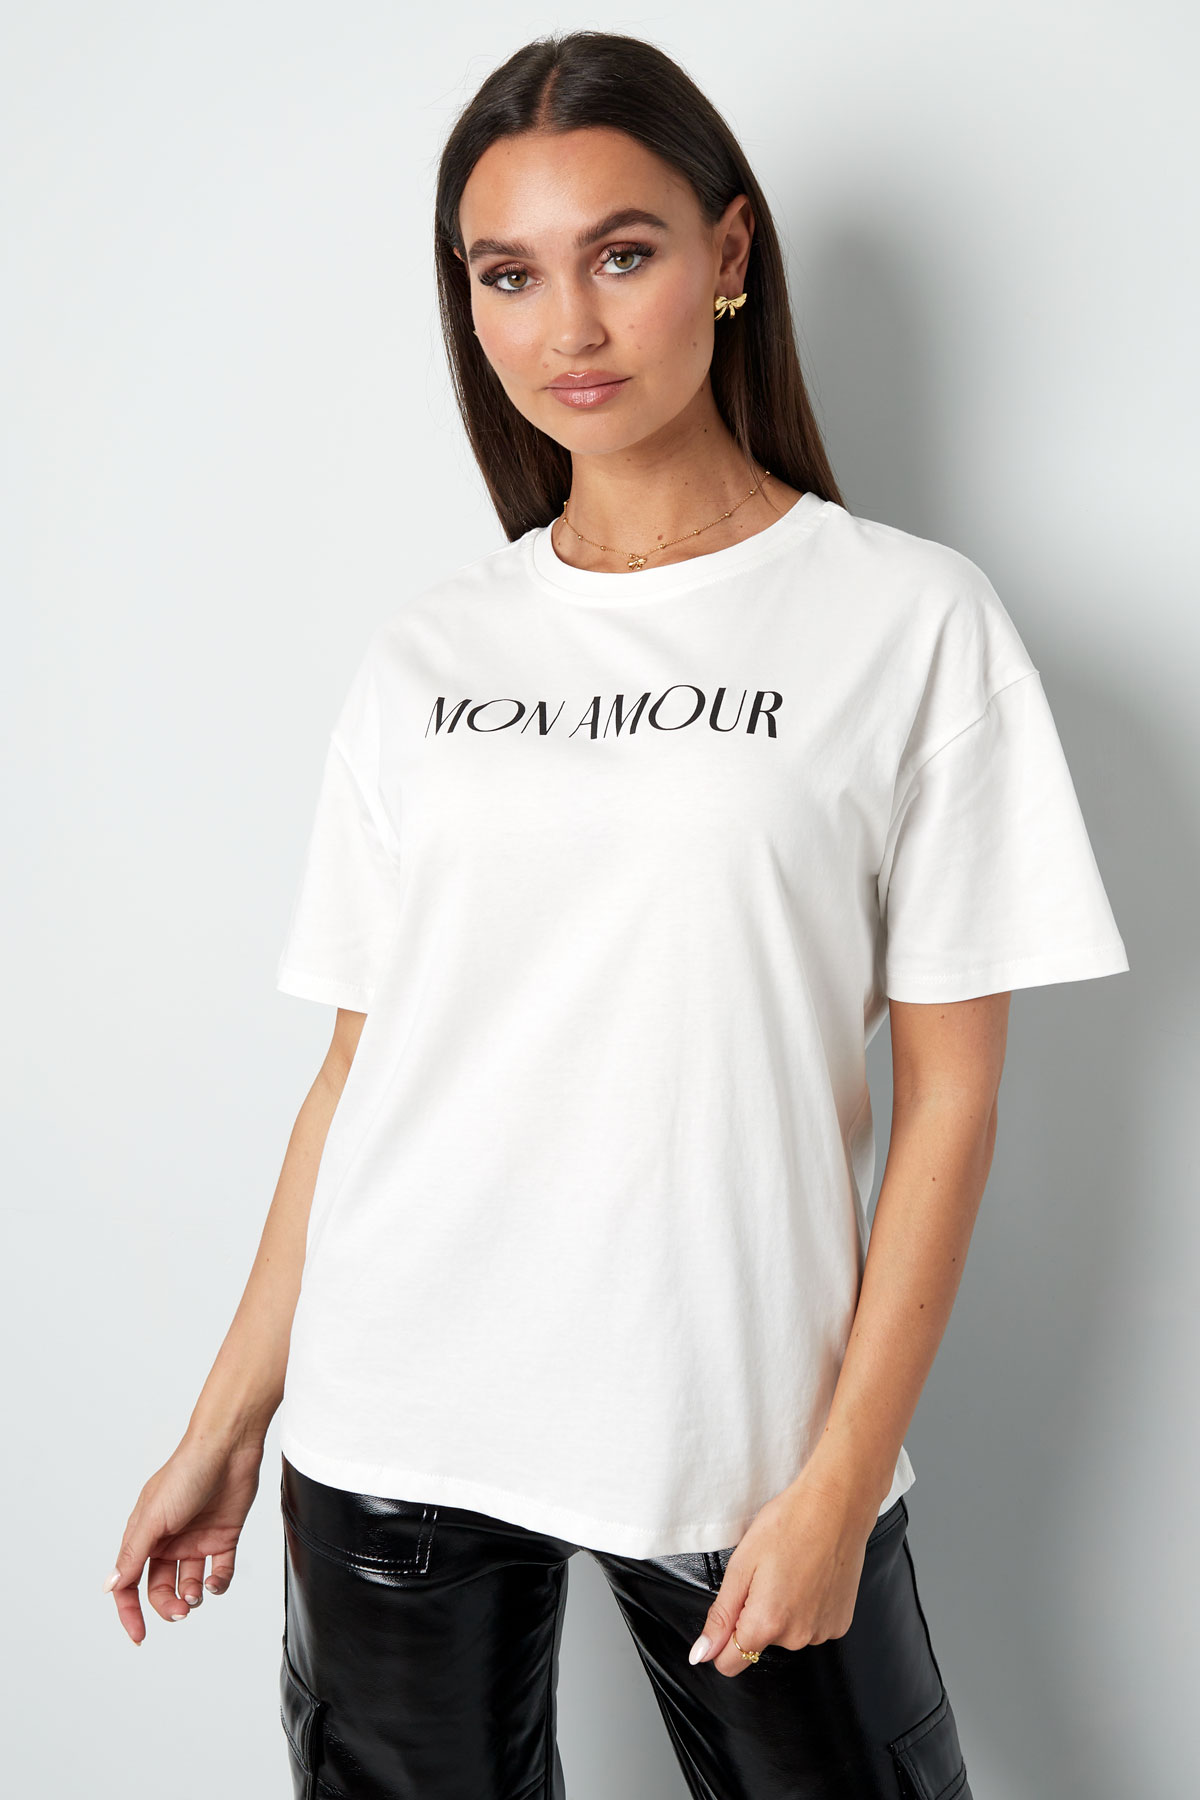 T-shirt mon amour - zwart wit